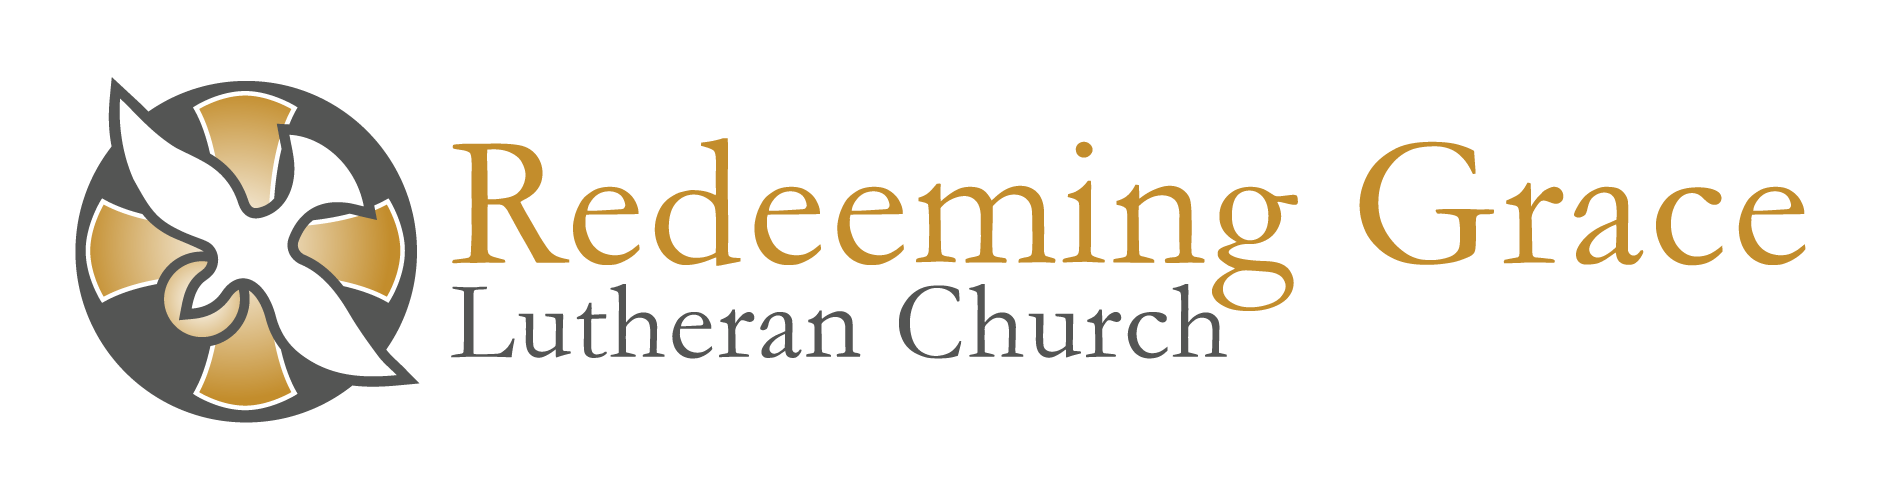 Redeeming Grace Lutheran Church